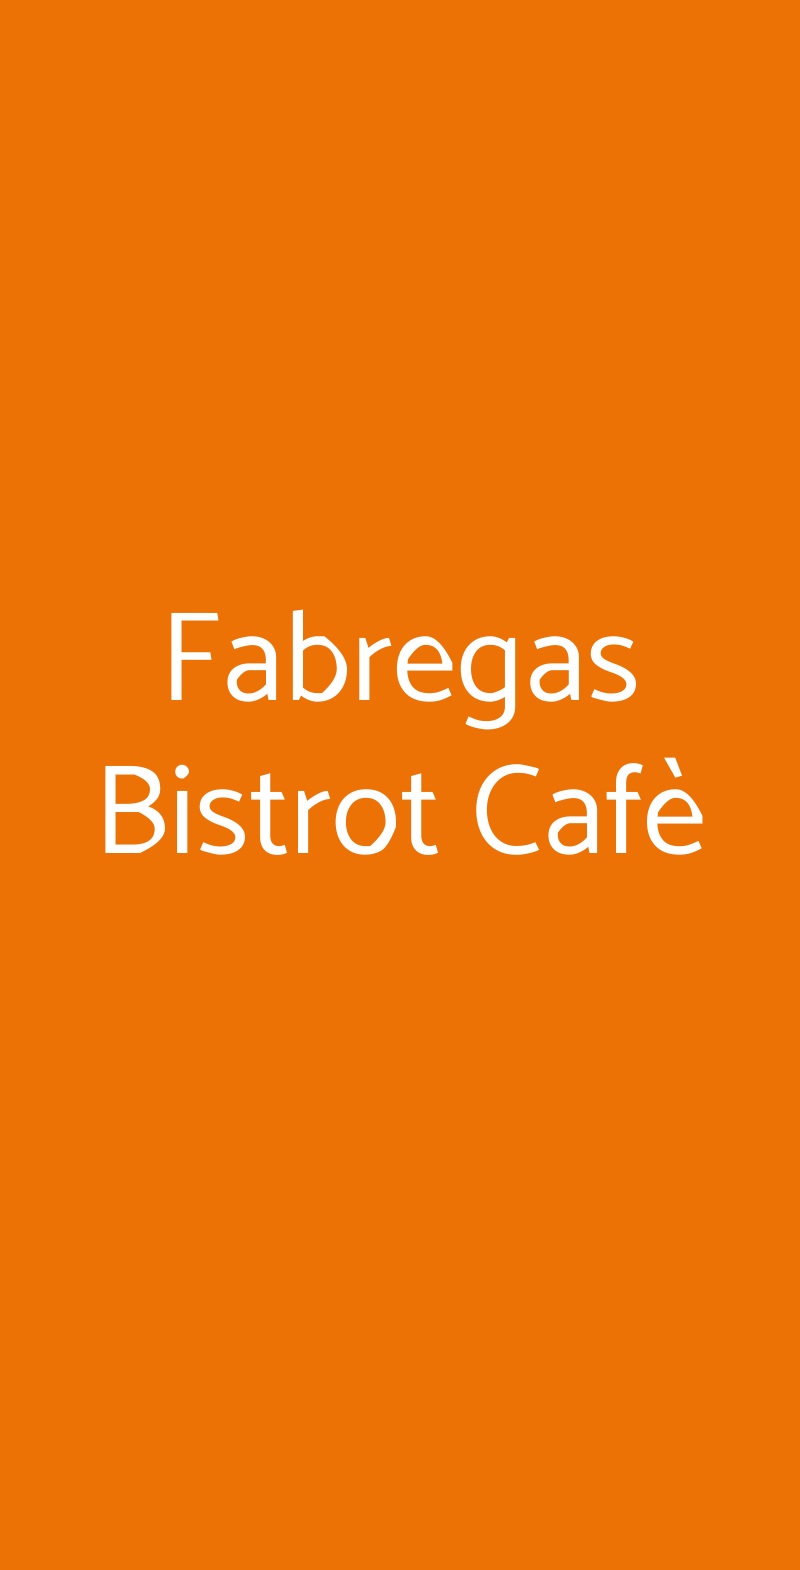 Fabregas Bistrot Cafè Milano menù 1 pagina